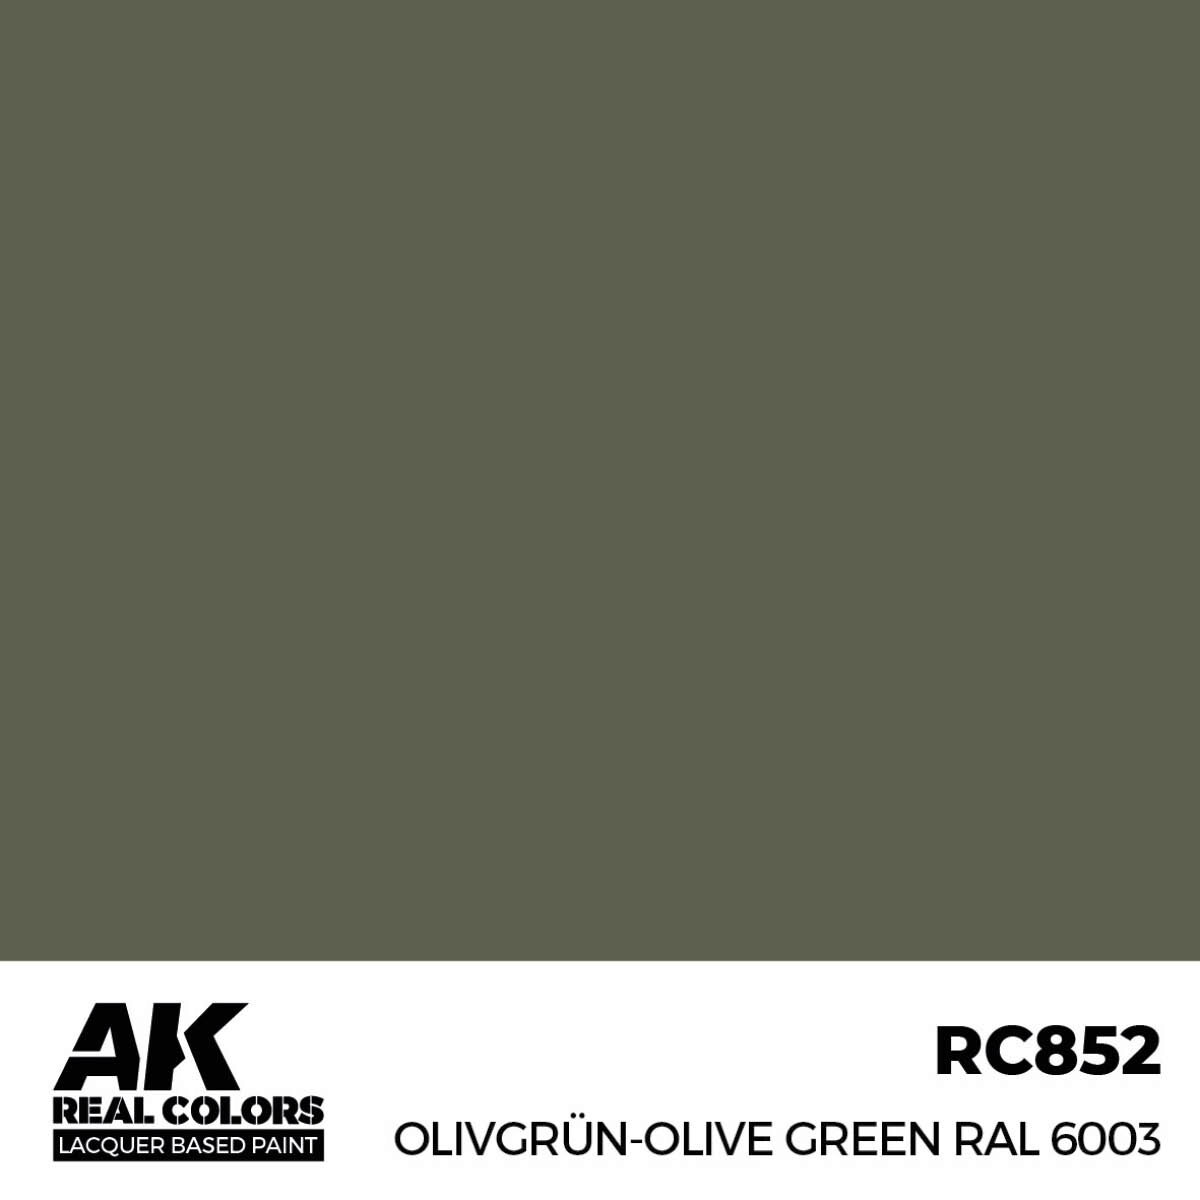 AK RC852 Real Colors Olivgrün-Olive Green RAL 6003 17 ml.